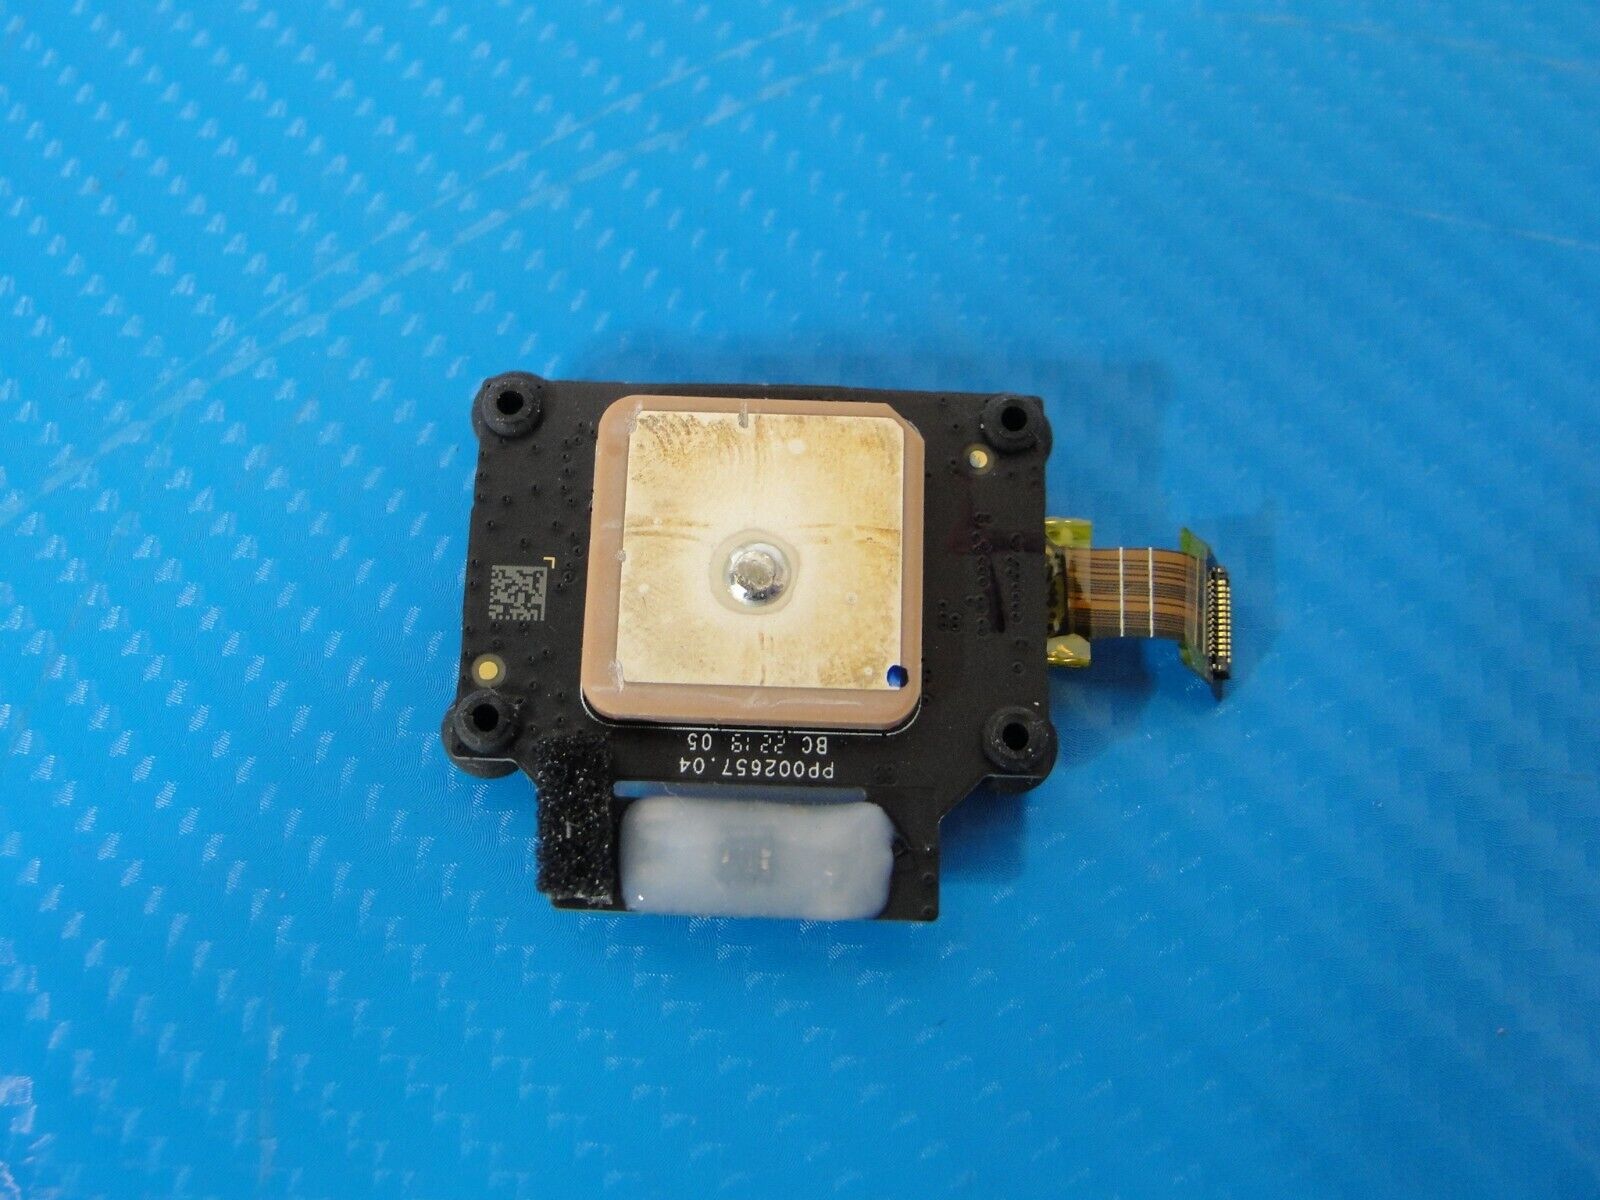 DJI Mini 3 PRO Drone Genuine GPS Module Board Replacement with Cable